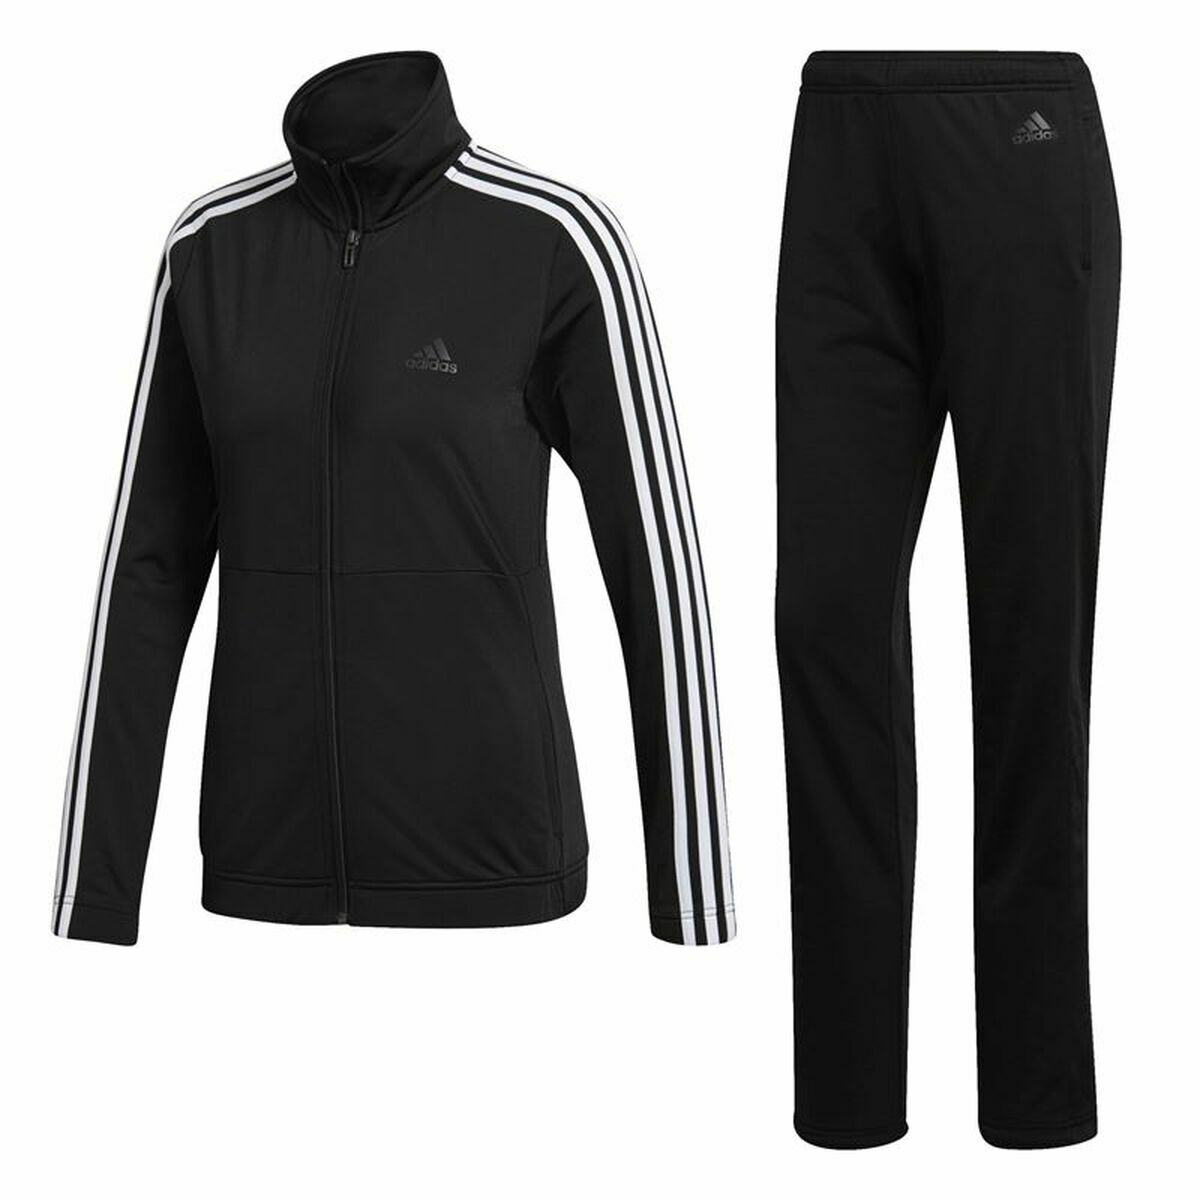 Trening Damă Adidas Three Stripes Negru - Mărime 2XS